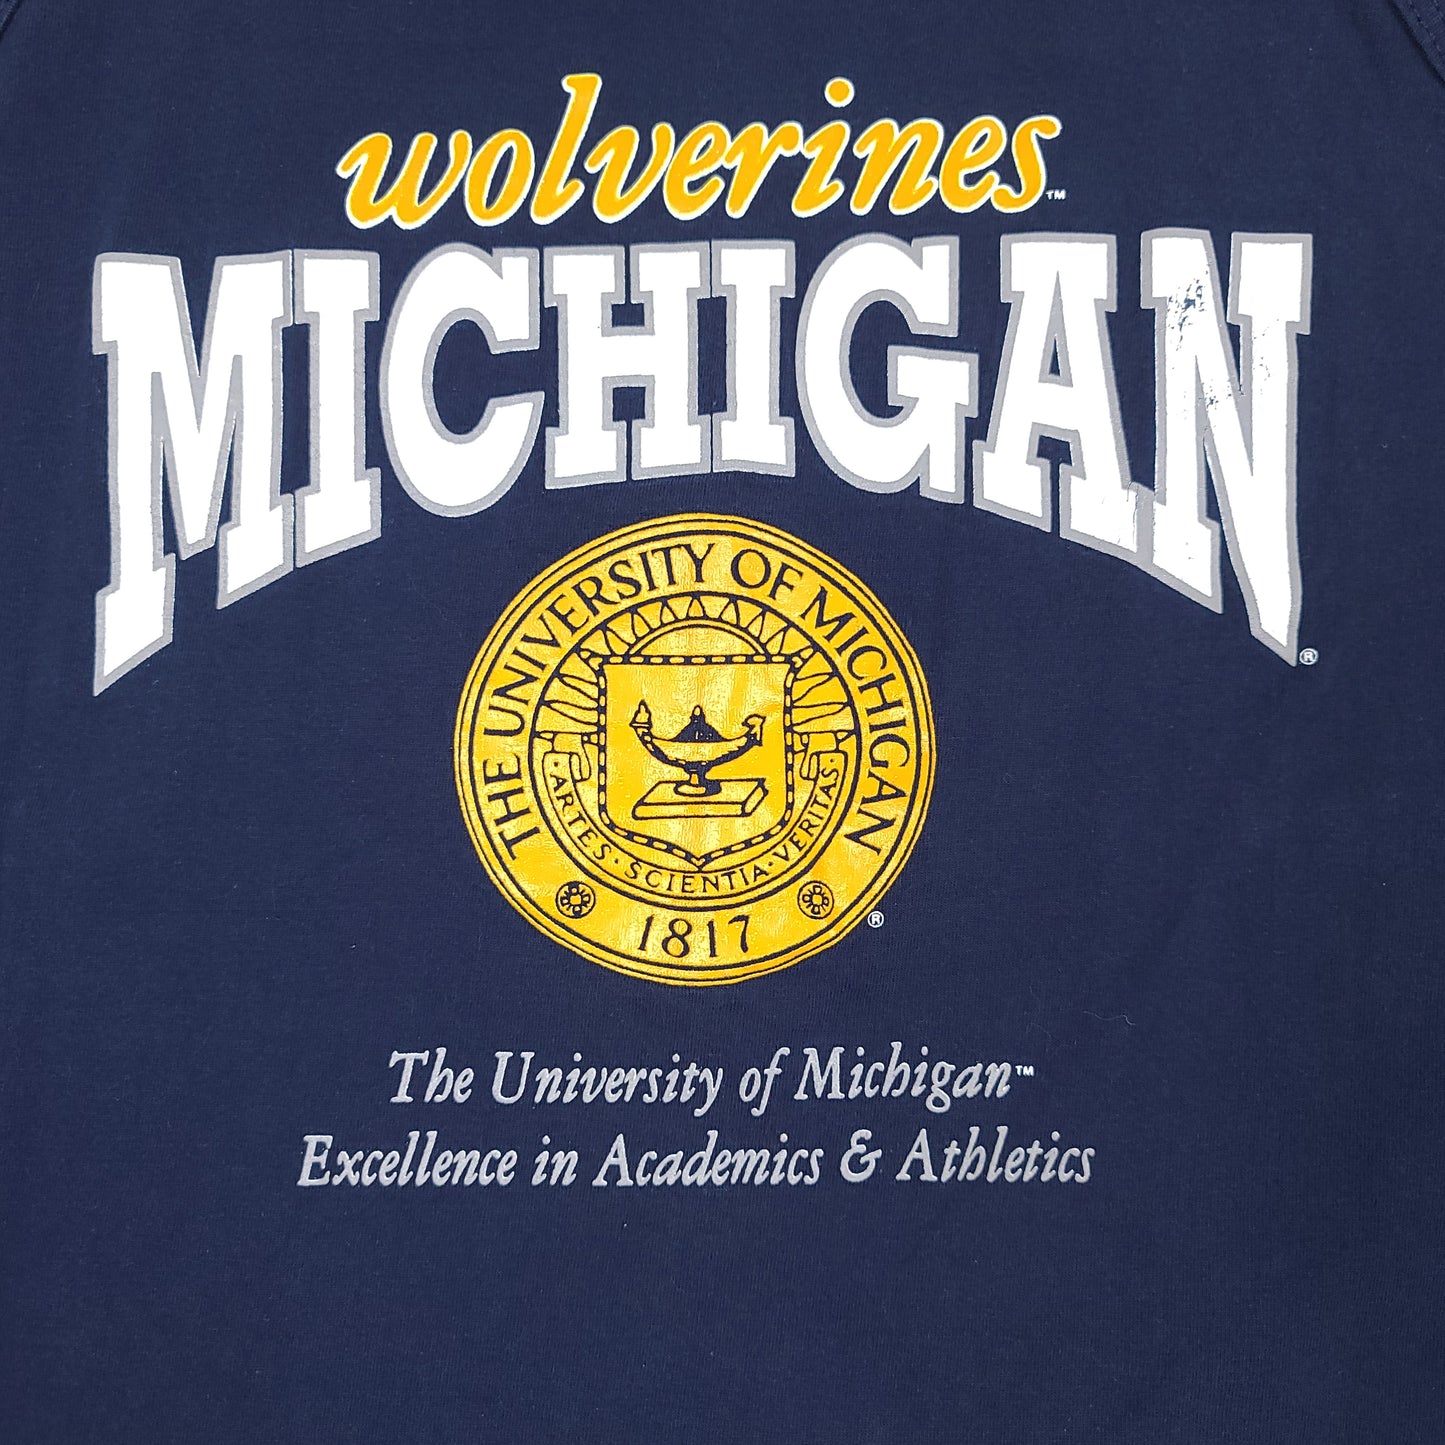 Vintage University of Michigan Wolverines Navy Blue Tank Top